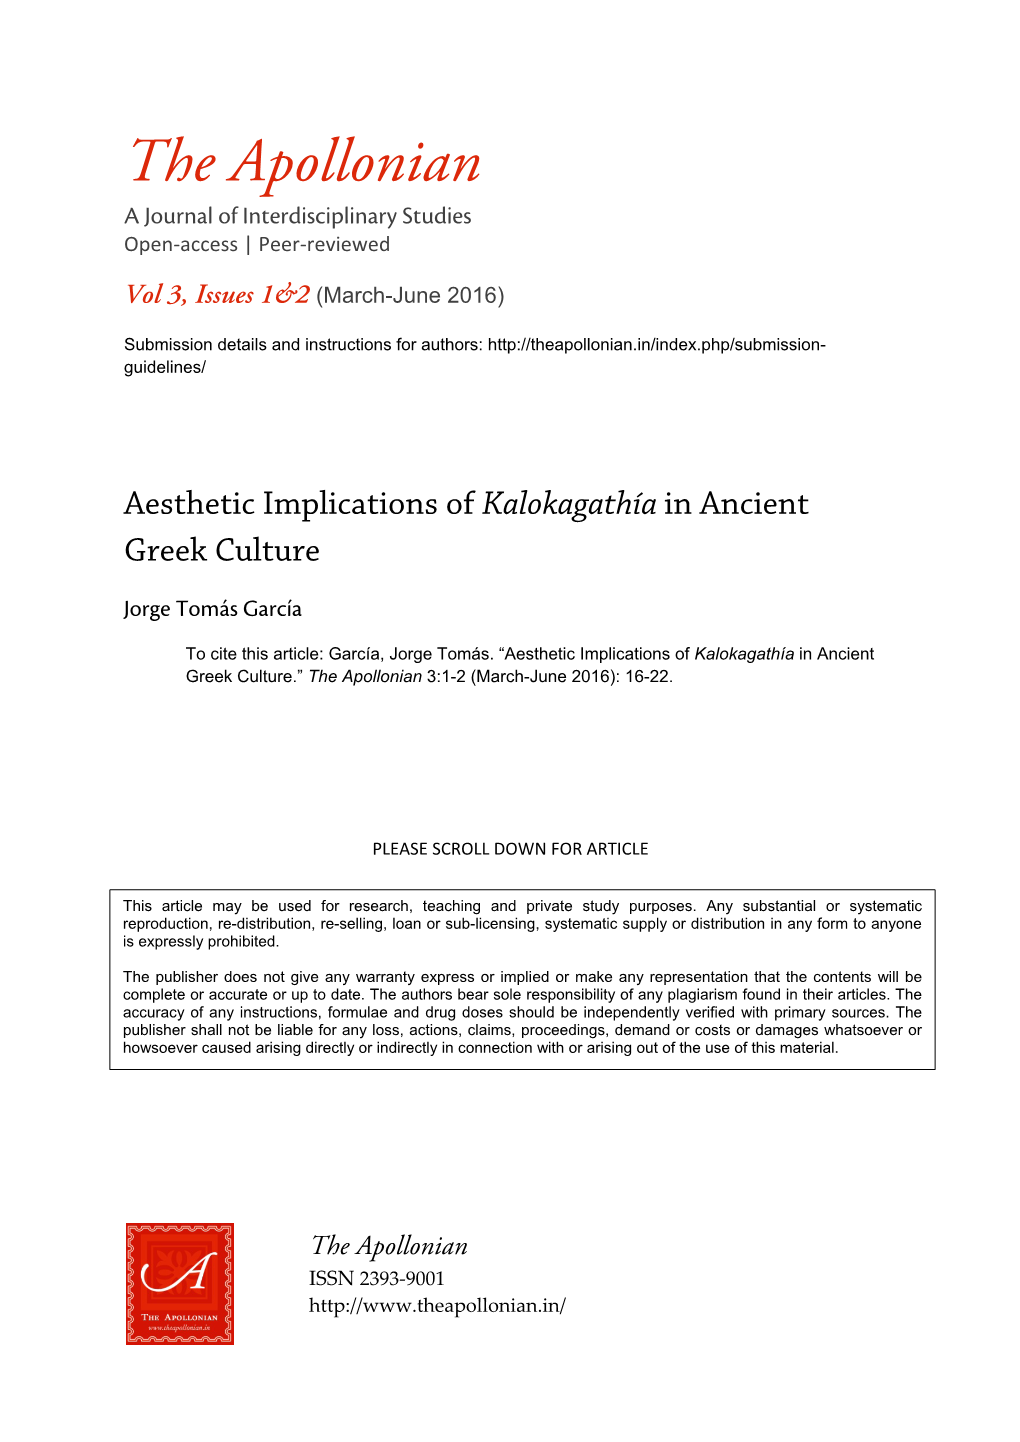 Kalokagathía in Ancient Greek Culture